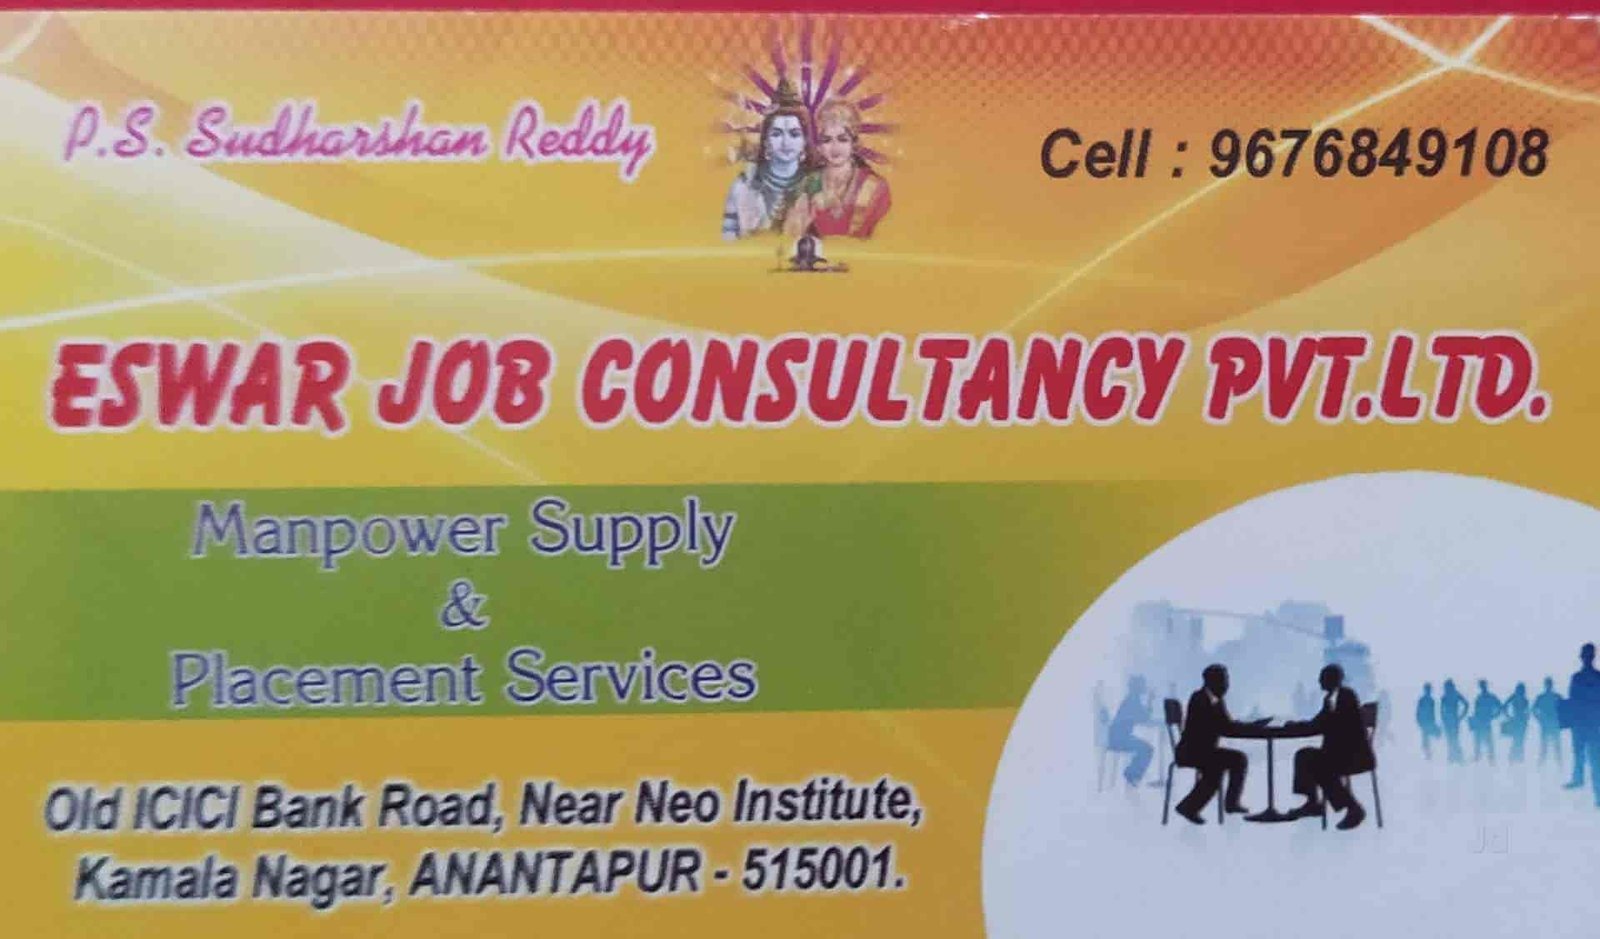 Eswar Job Consultancy Pt Ltd